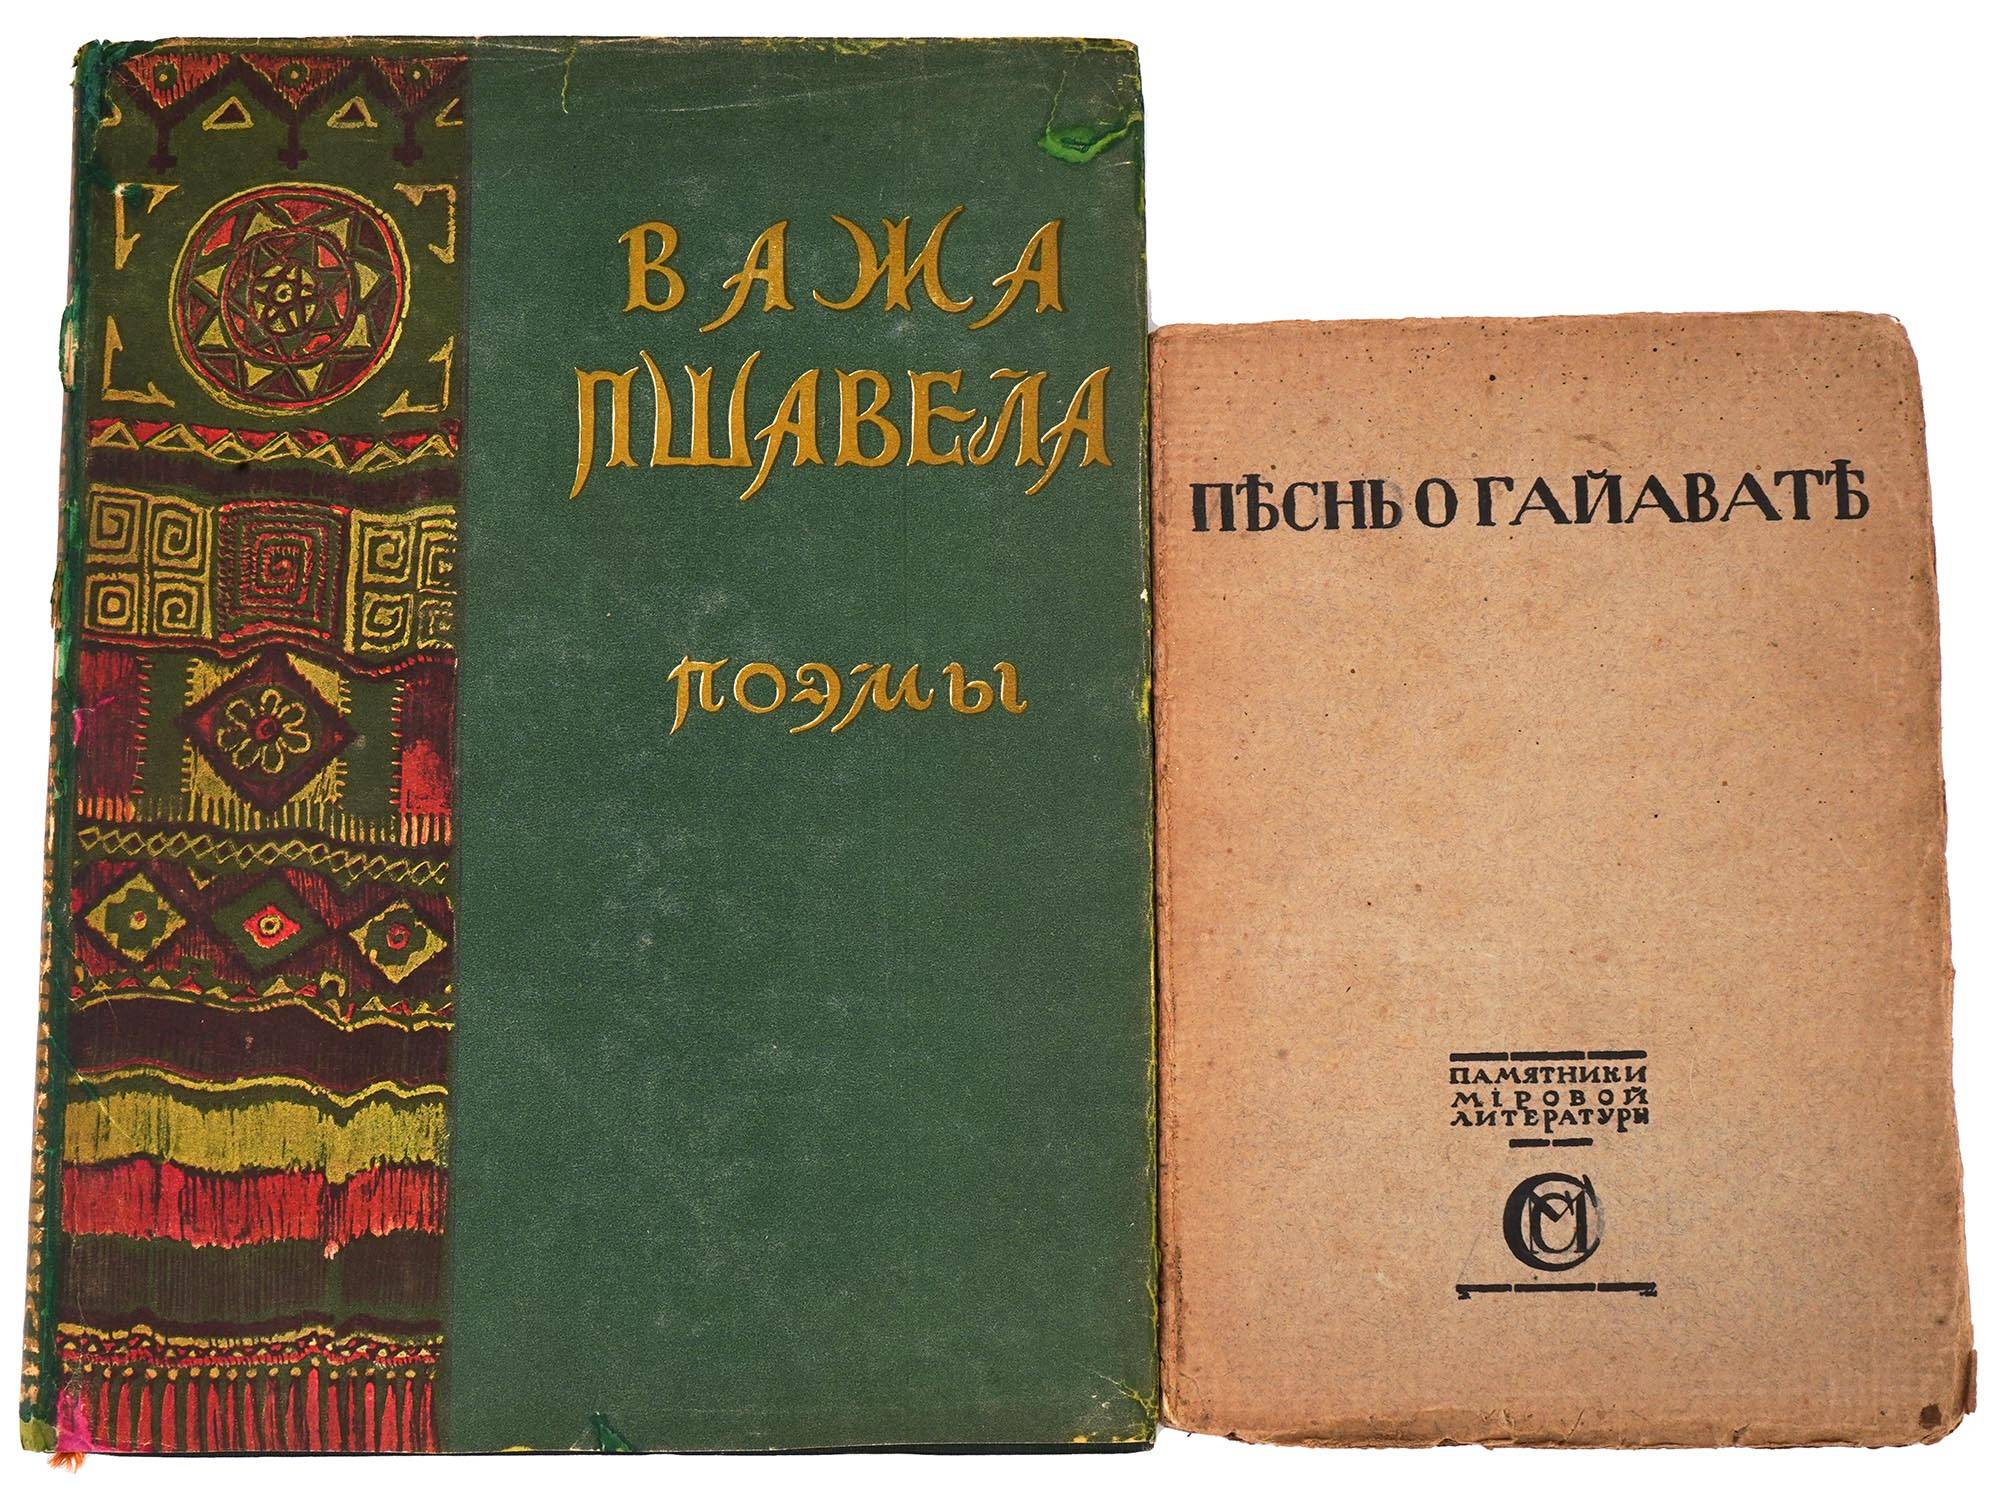 RUSSIAN BOOKS BY HENRY LONGFELLOW AND VAZHA PSHAVELA PIC-1